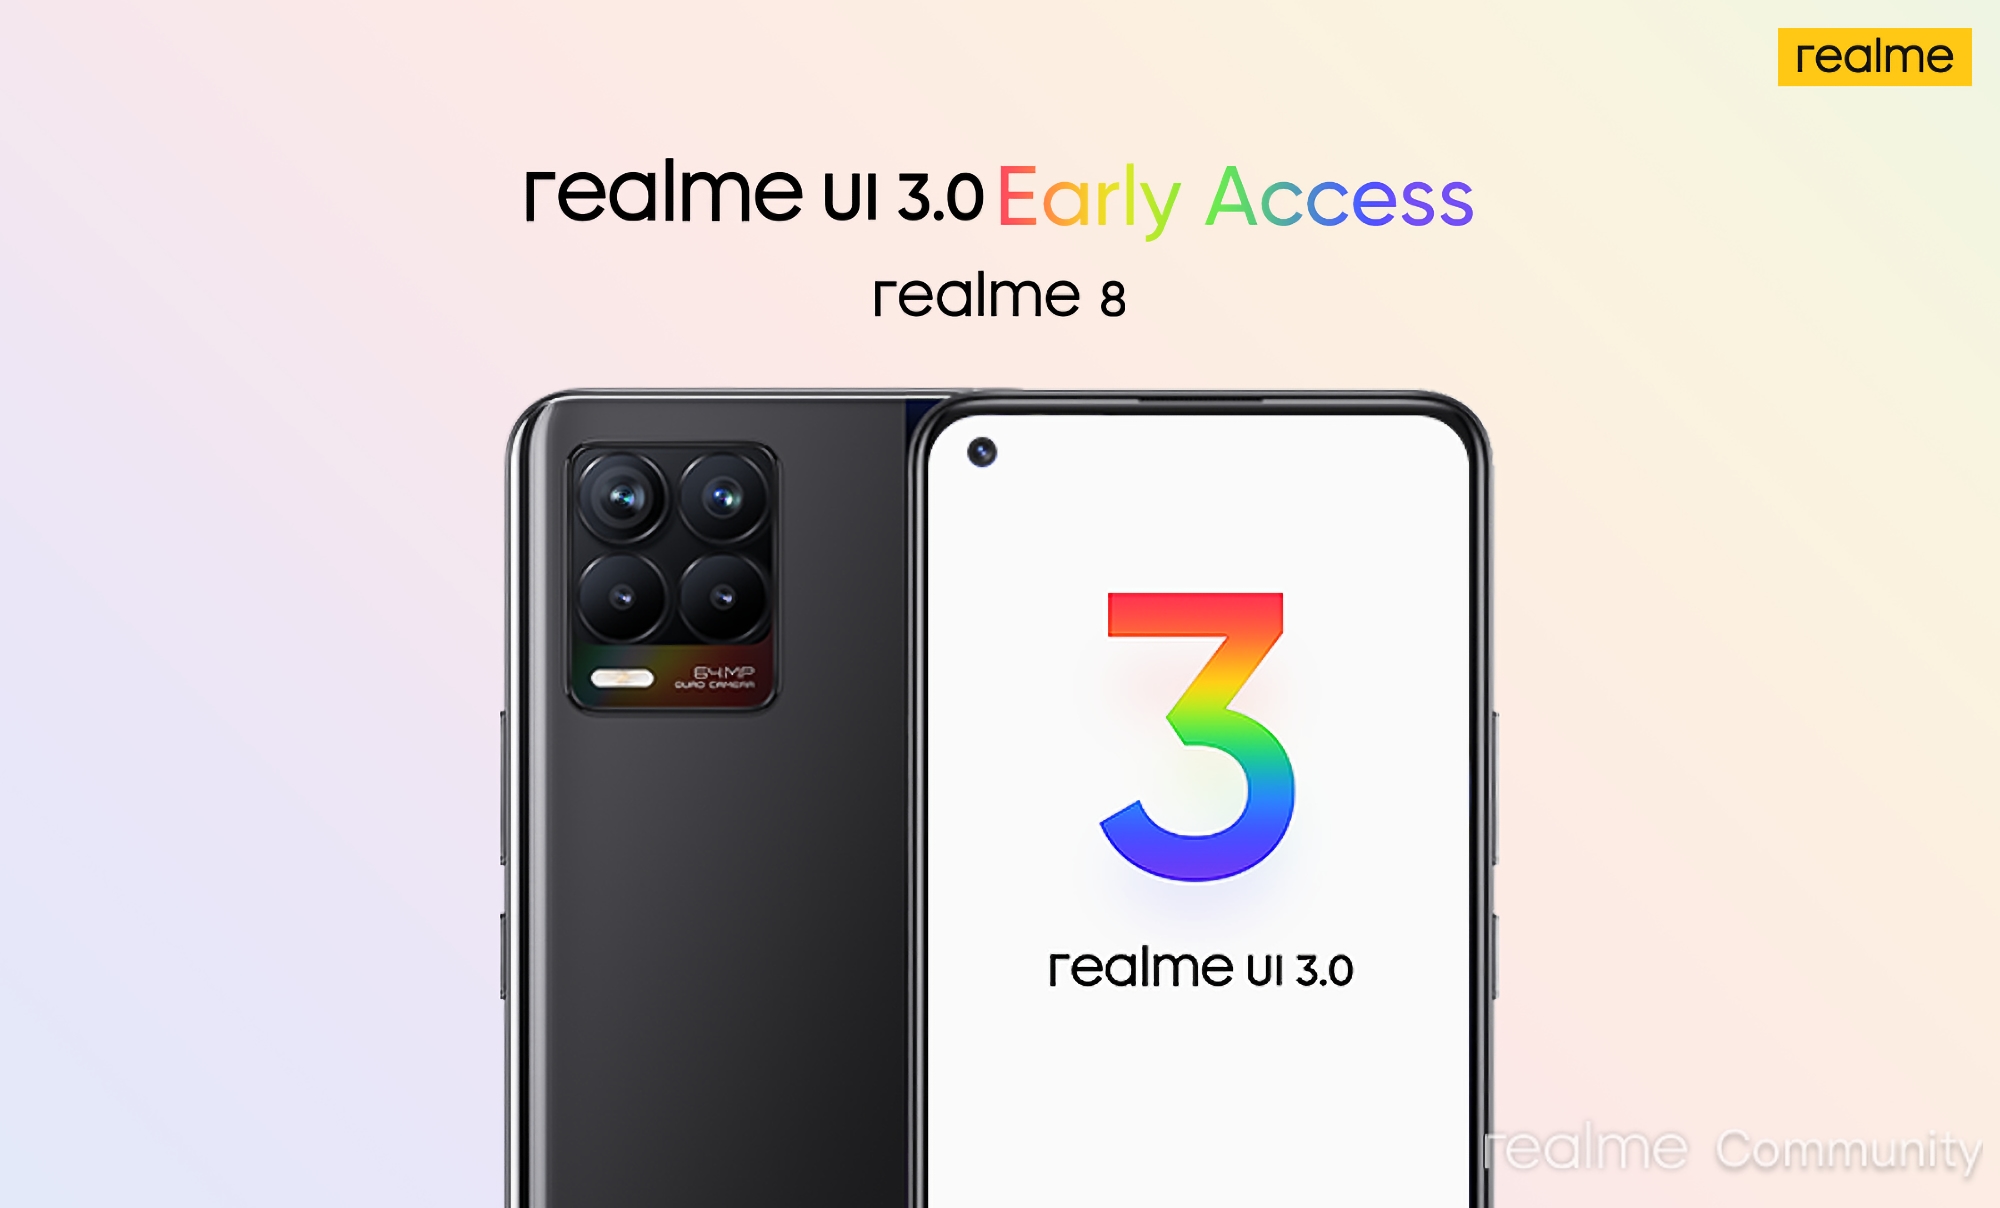 realme ha lanciato realme UI 3.0 testing basato su Android 12 per realme 8